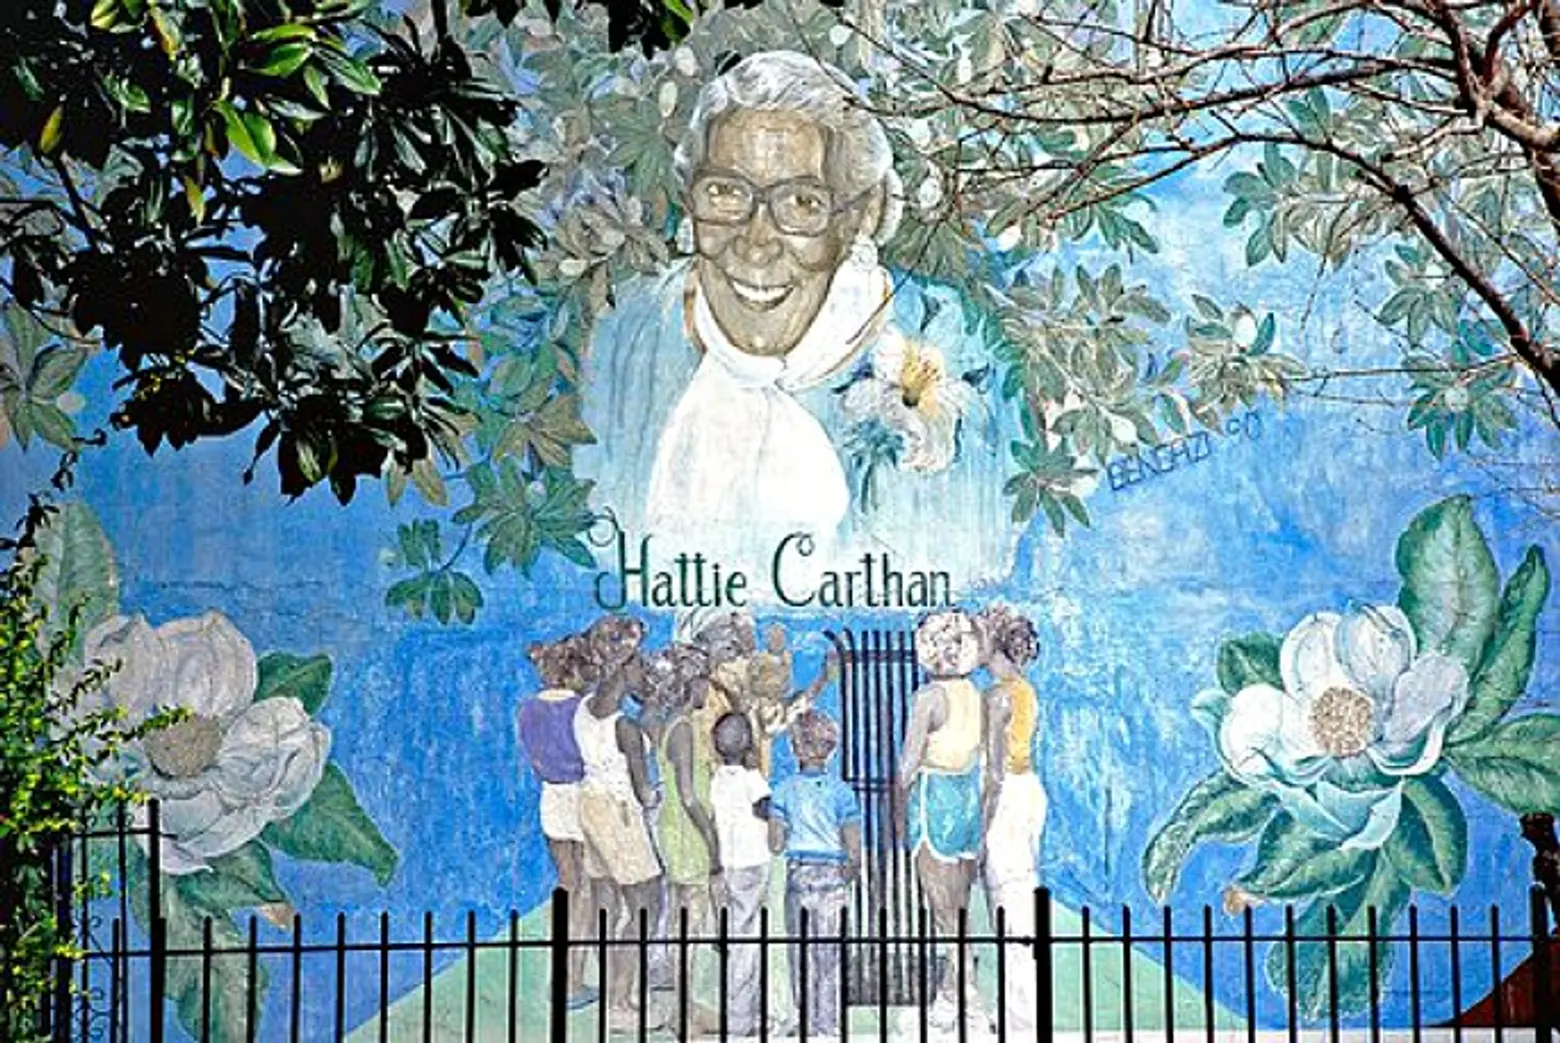 Hattie Carthan, Hattie Carthan Community Garden, Magnolia Tree Earth Center, Magnolia Grandiflora